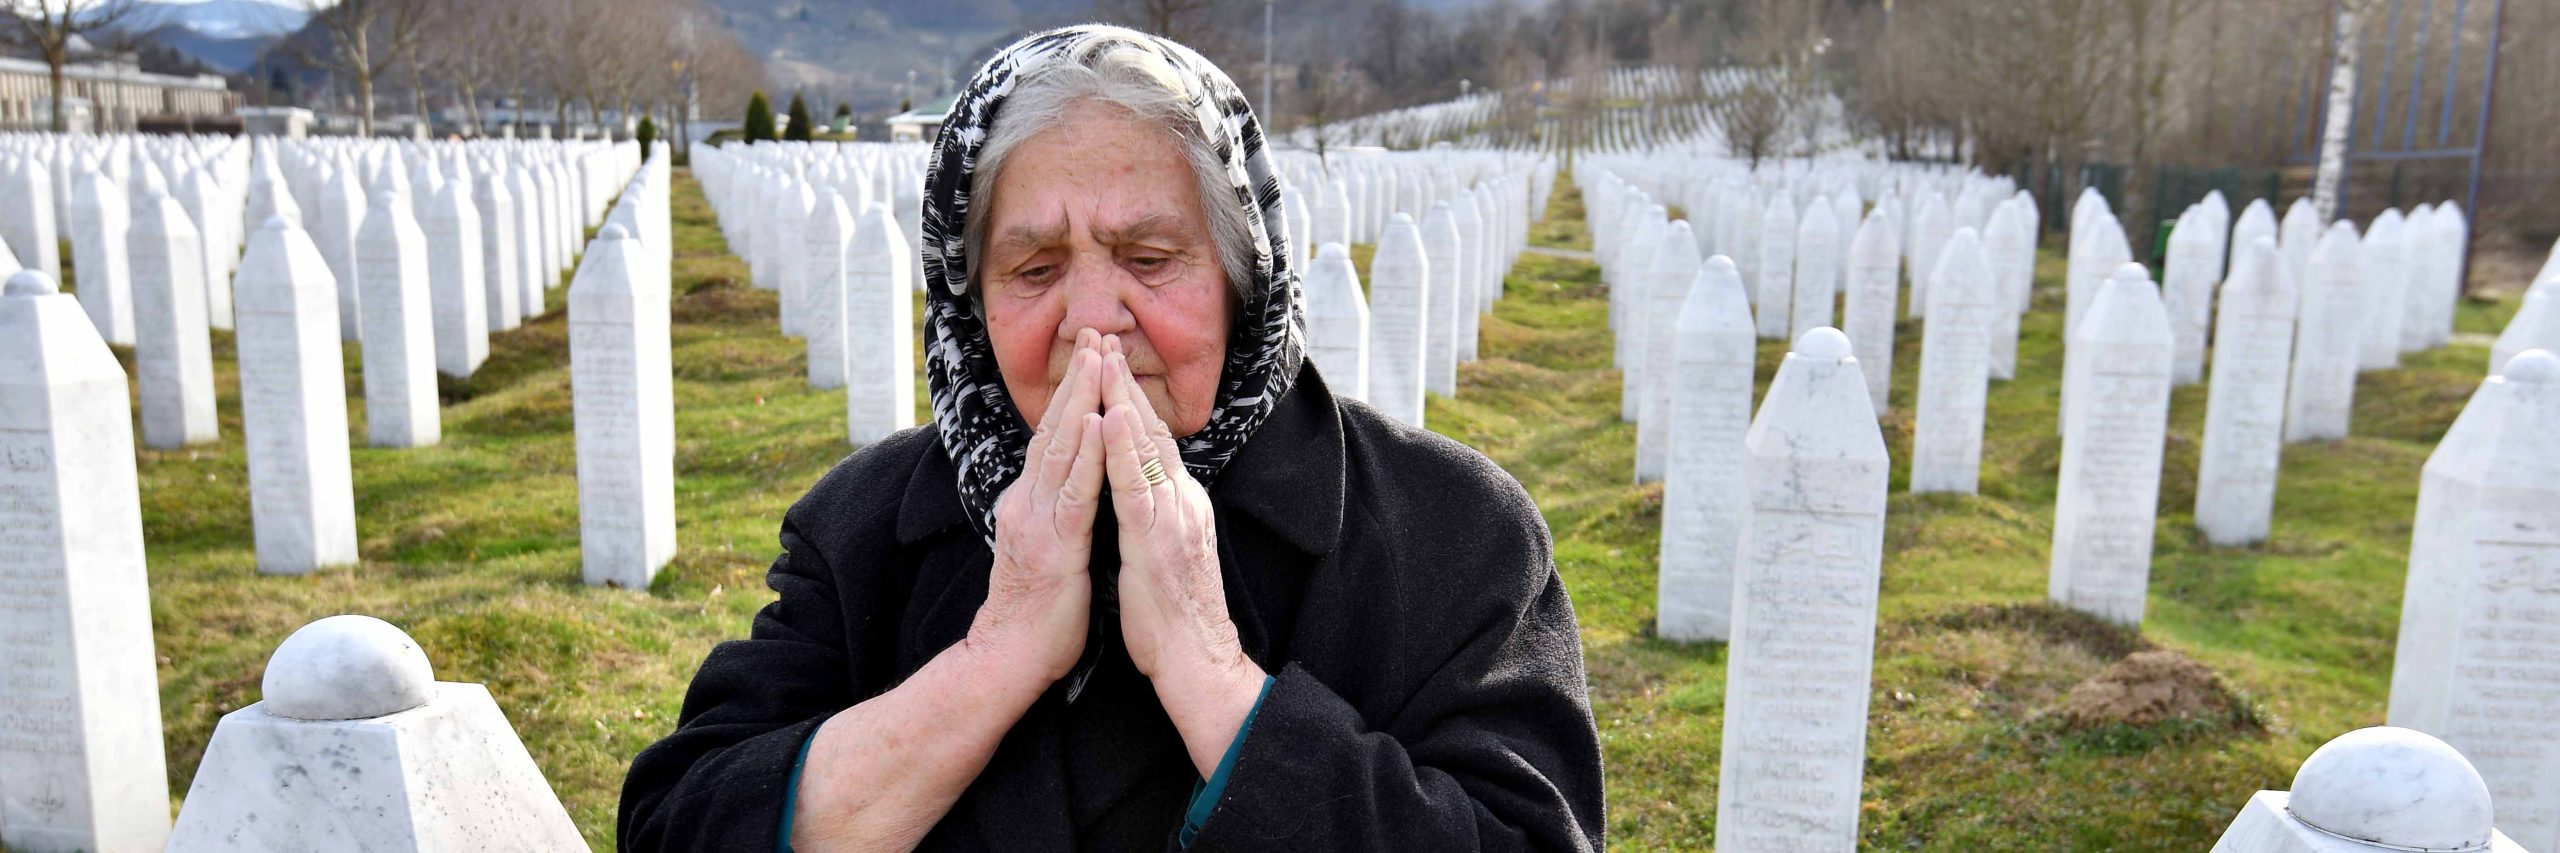 BOSNIA-SERBIA-WAR CRIME-HISTORY-SURVIVOR